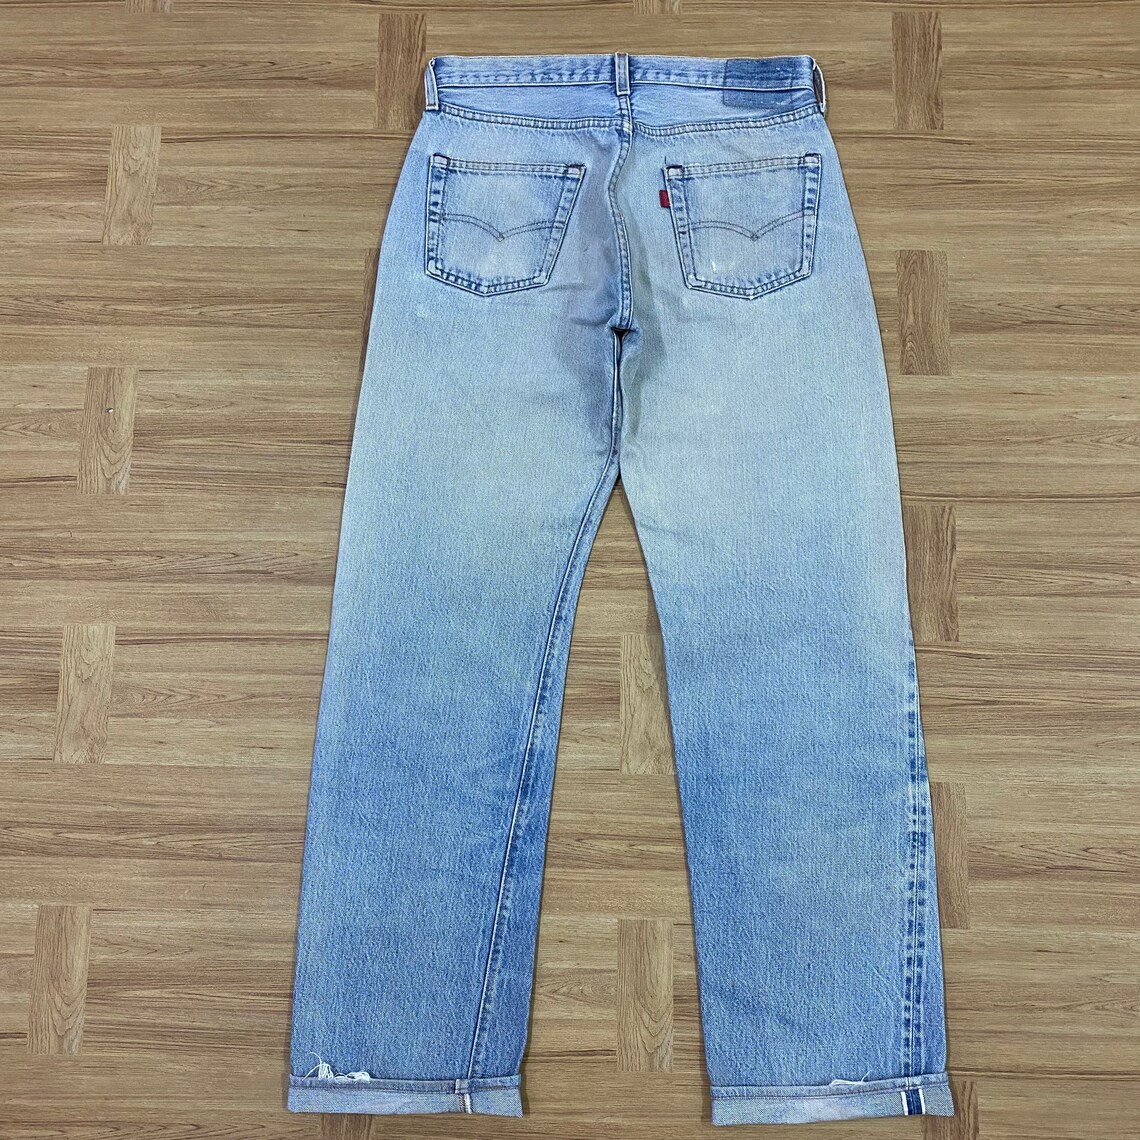 Levis 501 Jeans 80s Rindem 524 Ripped Distressed Denim | Etsy